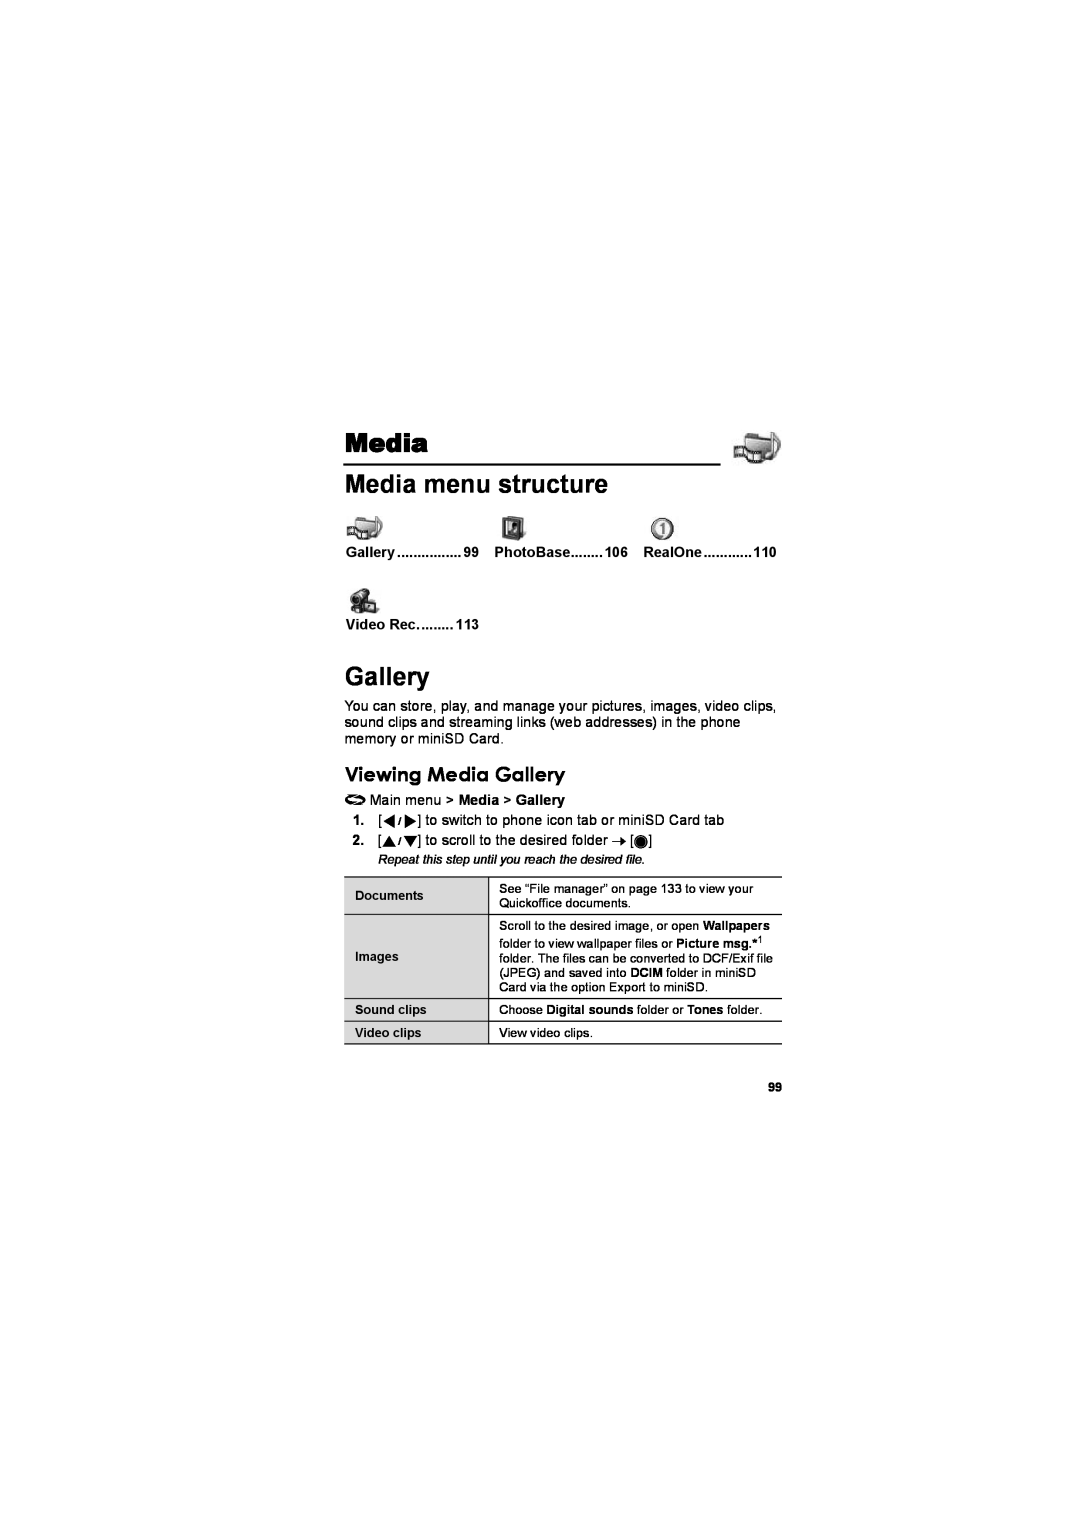 Panasonic EB-X800 manual Media Media menu structure, Viewing Media Gallery, RealOne 